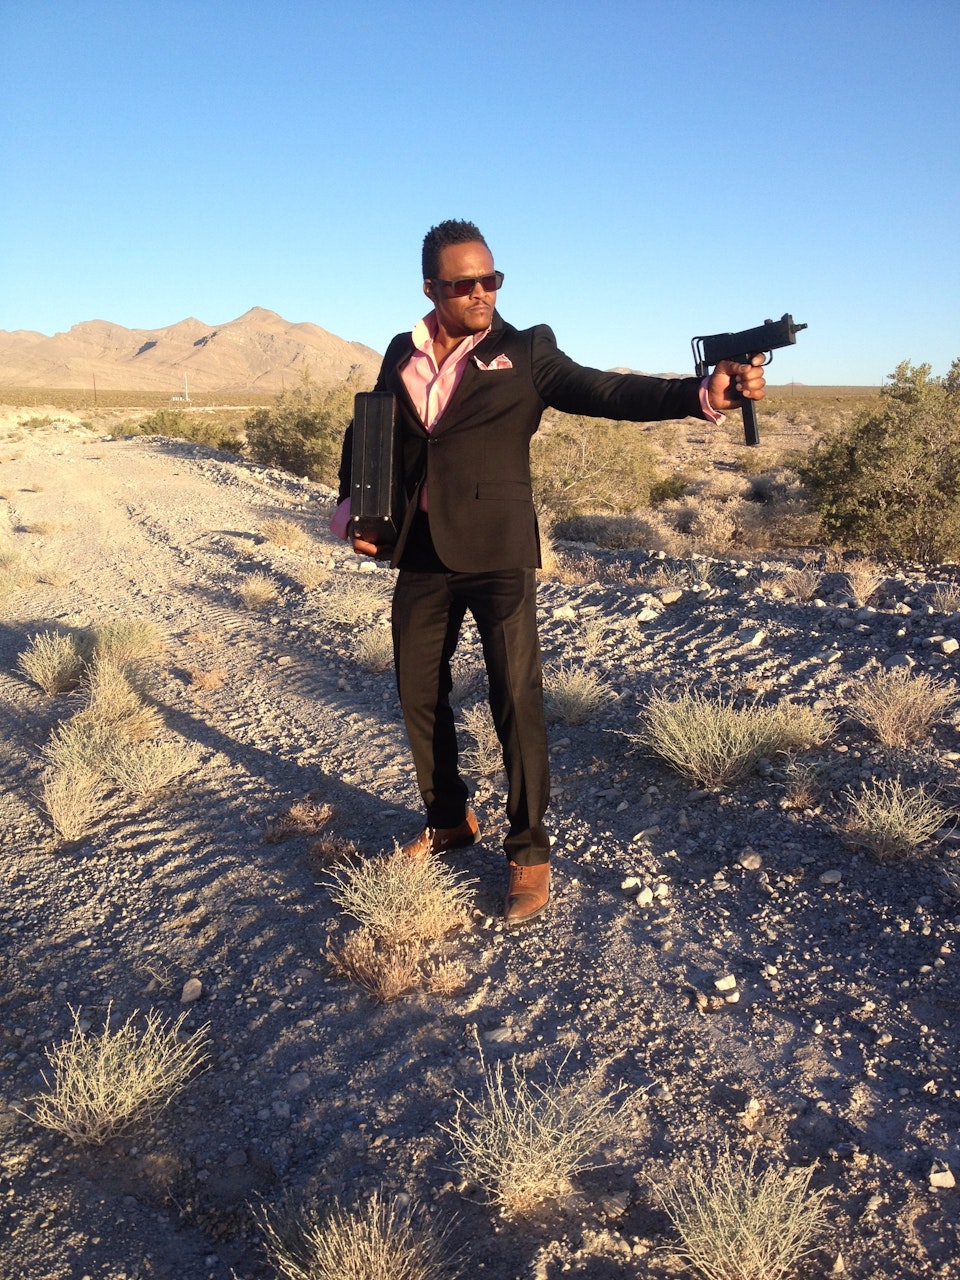 Solo per il Weekend / Feature Film - Director Kobayashi - Solo per il weekend - Shooting in Las Vegas desert